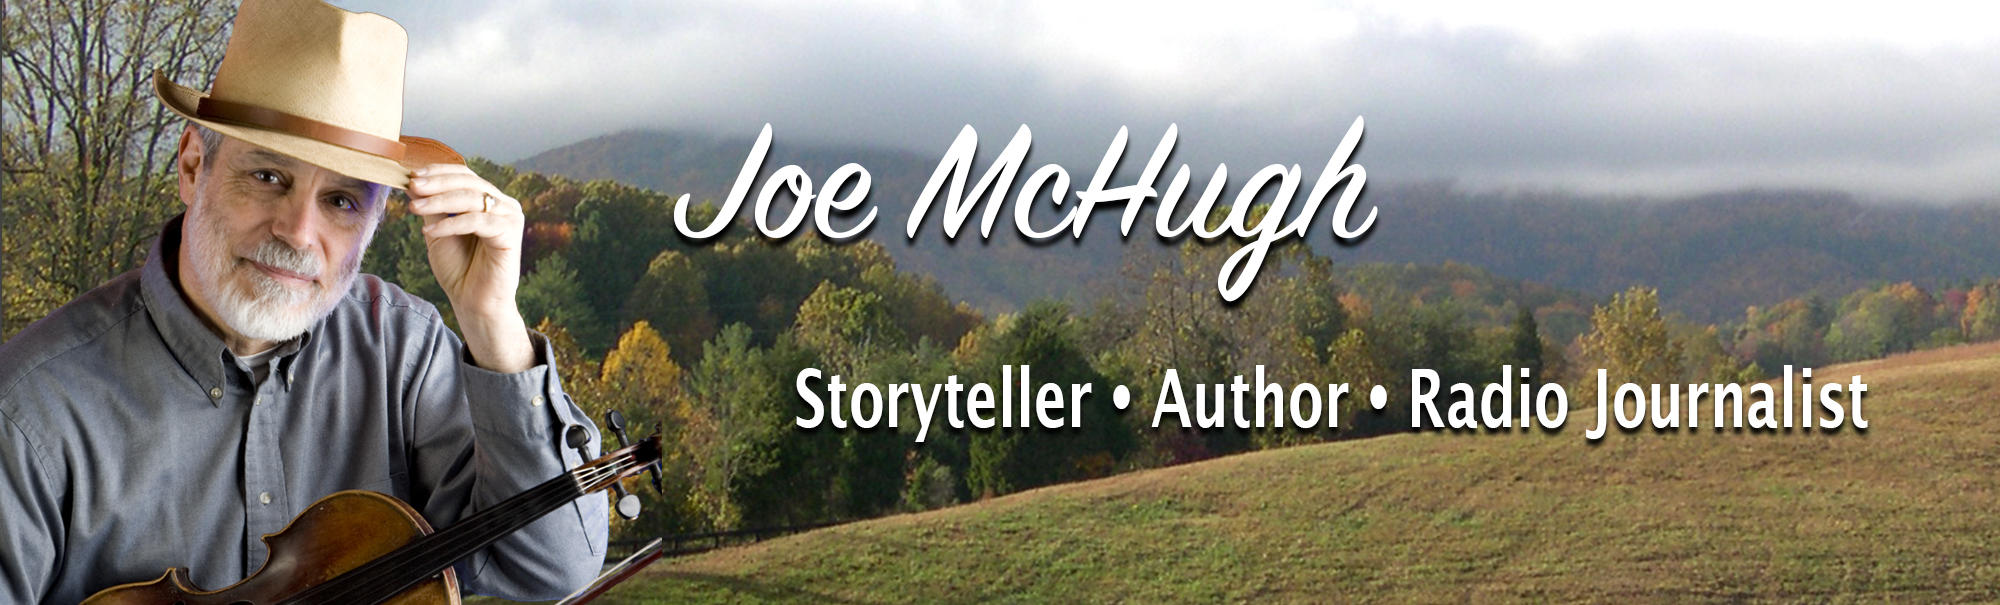 Joe McHugh Storyteller Author